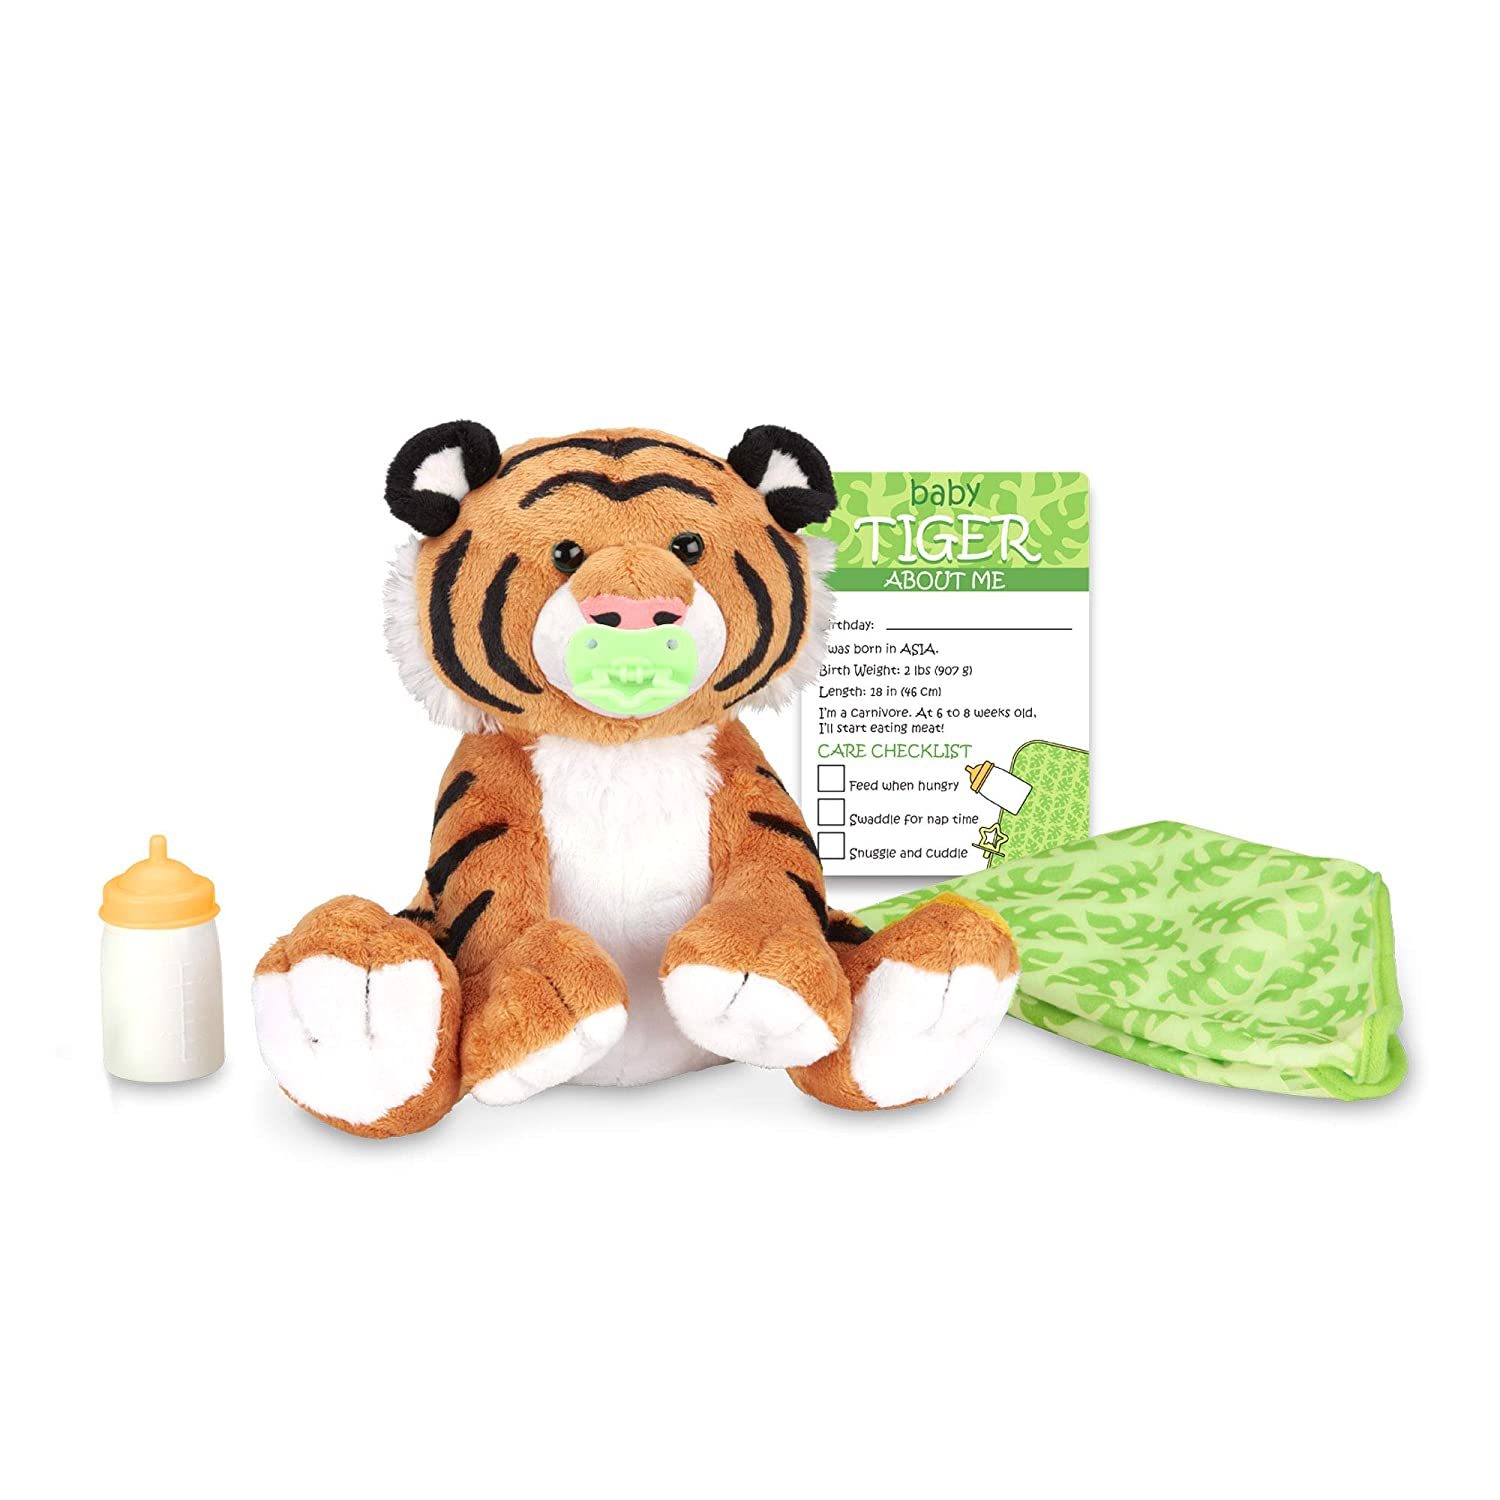 Melissa & Doug 11-Inch Baby Plush Stuffed Animal With Pacifier, Diaper